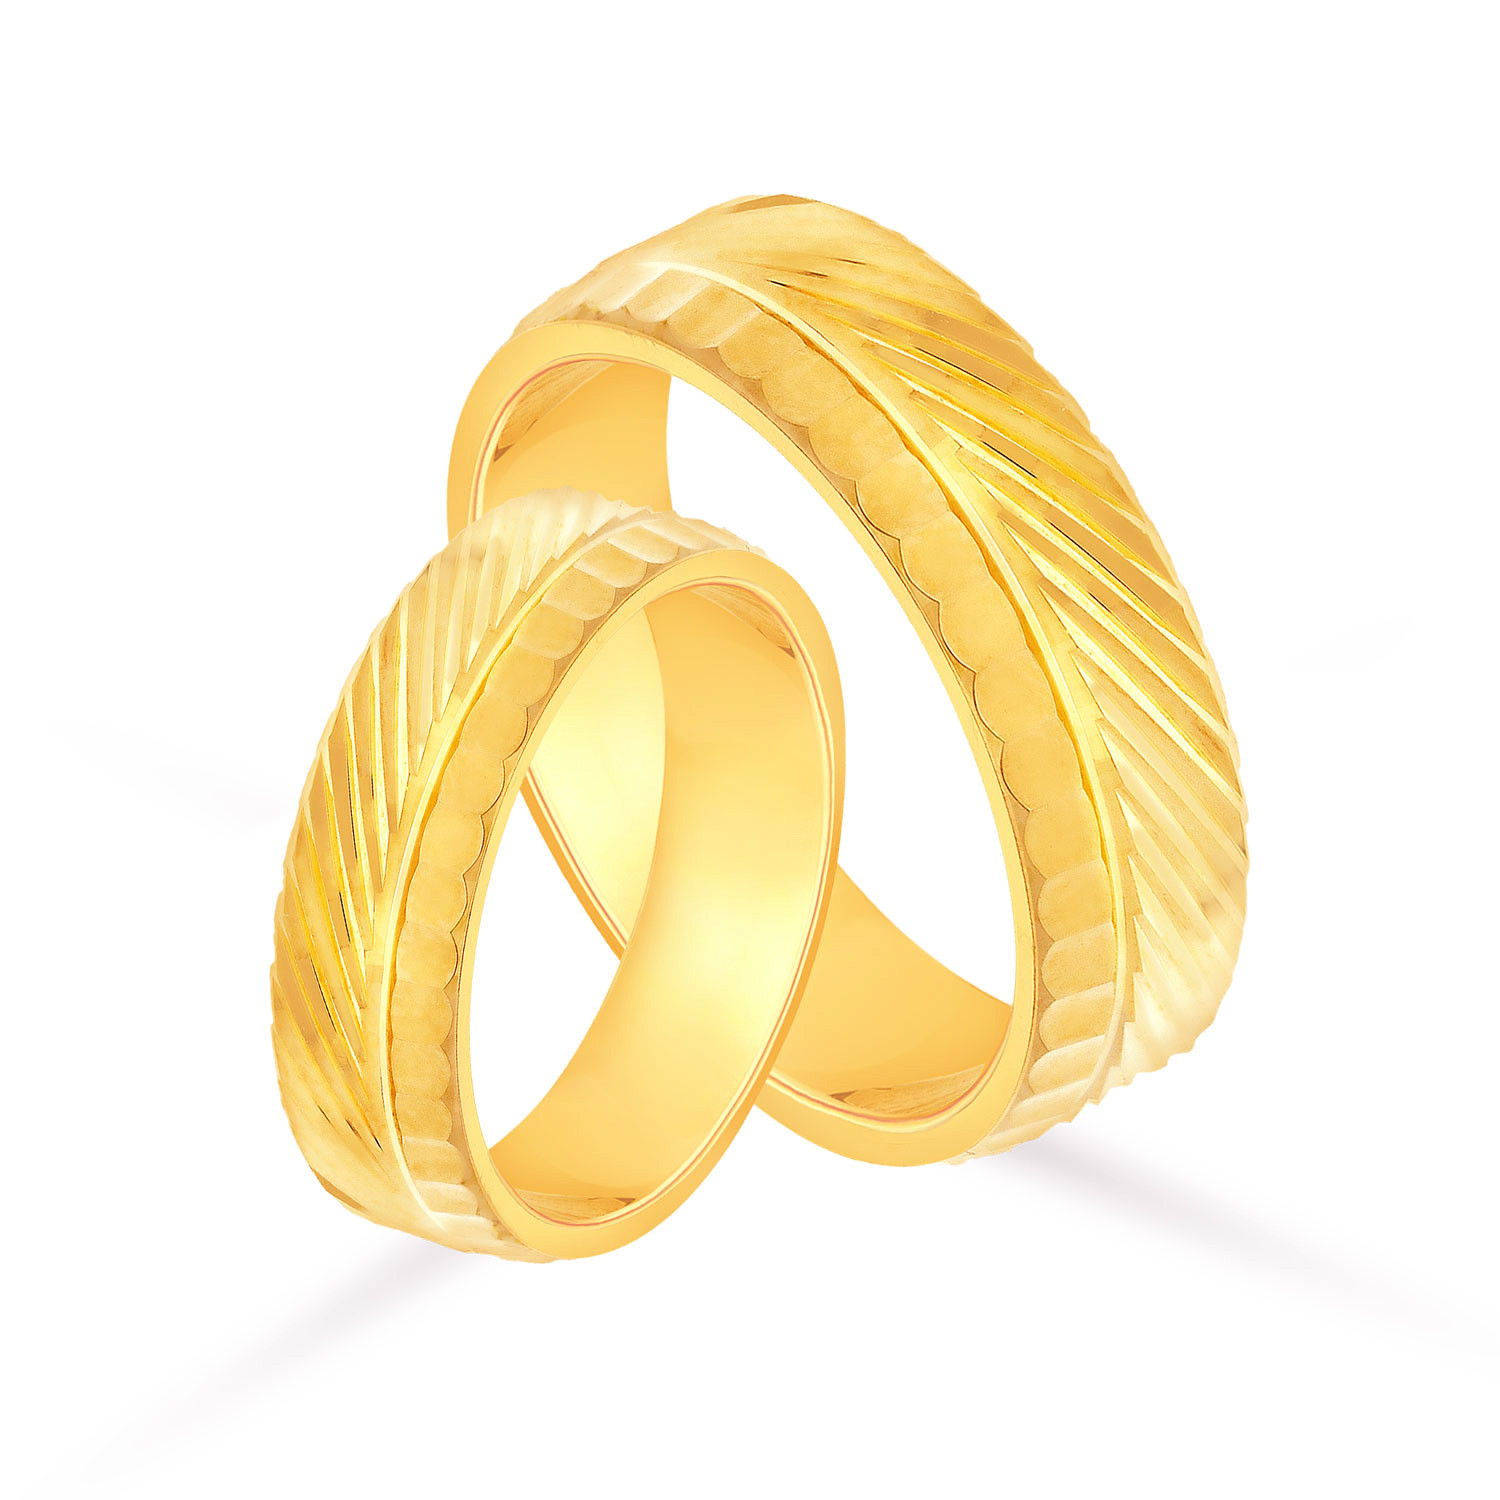 Buy The Raja- Rani Couple Rings Online from Vaibhav Jewellers